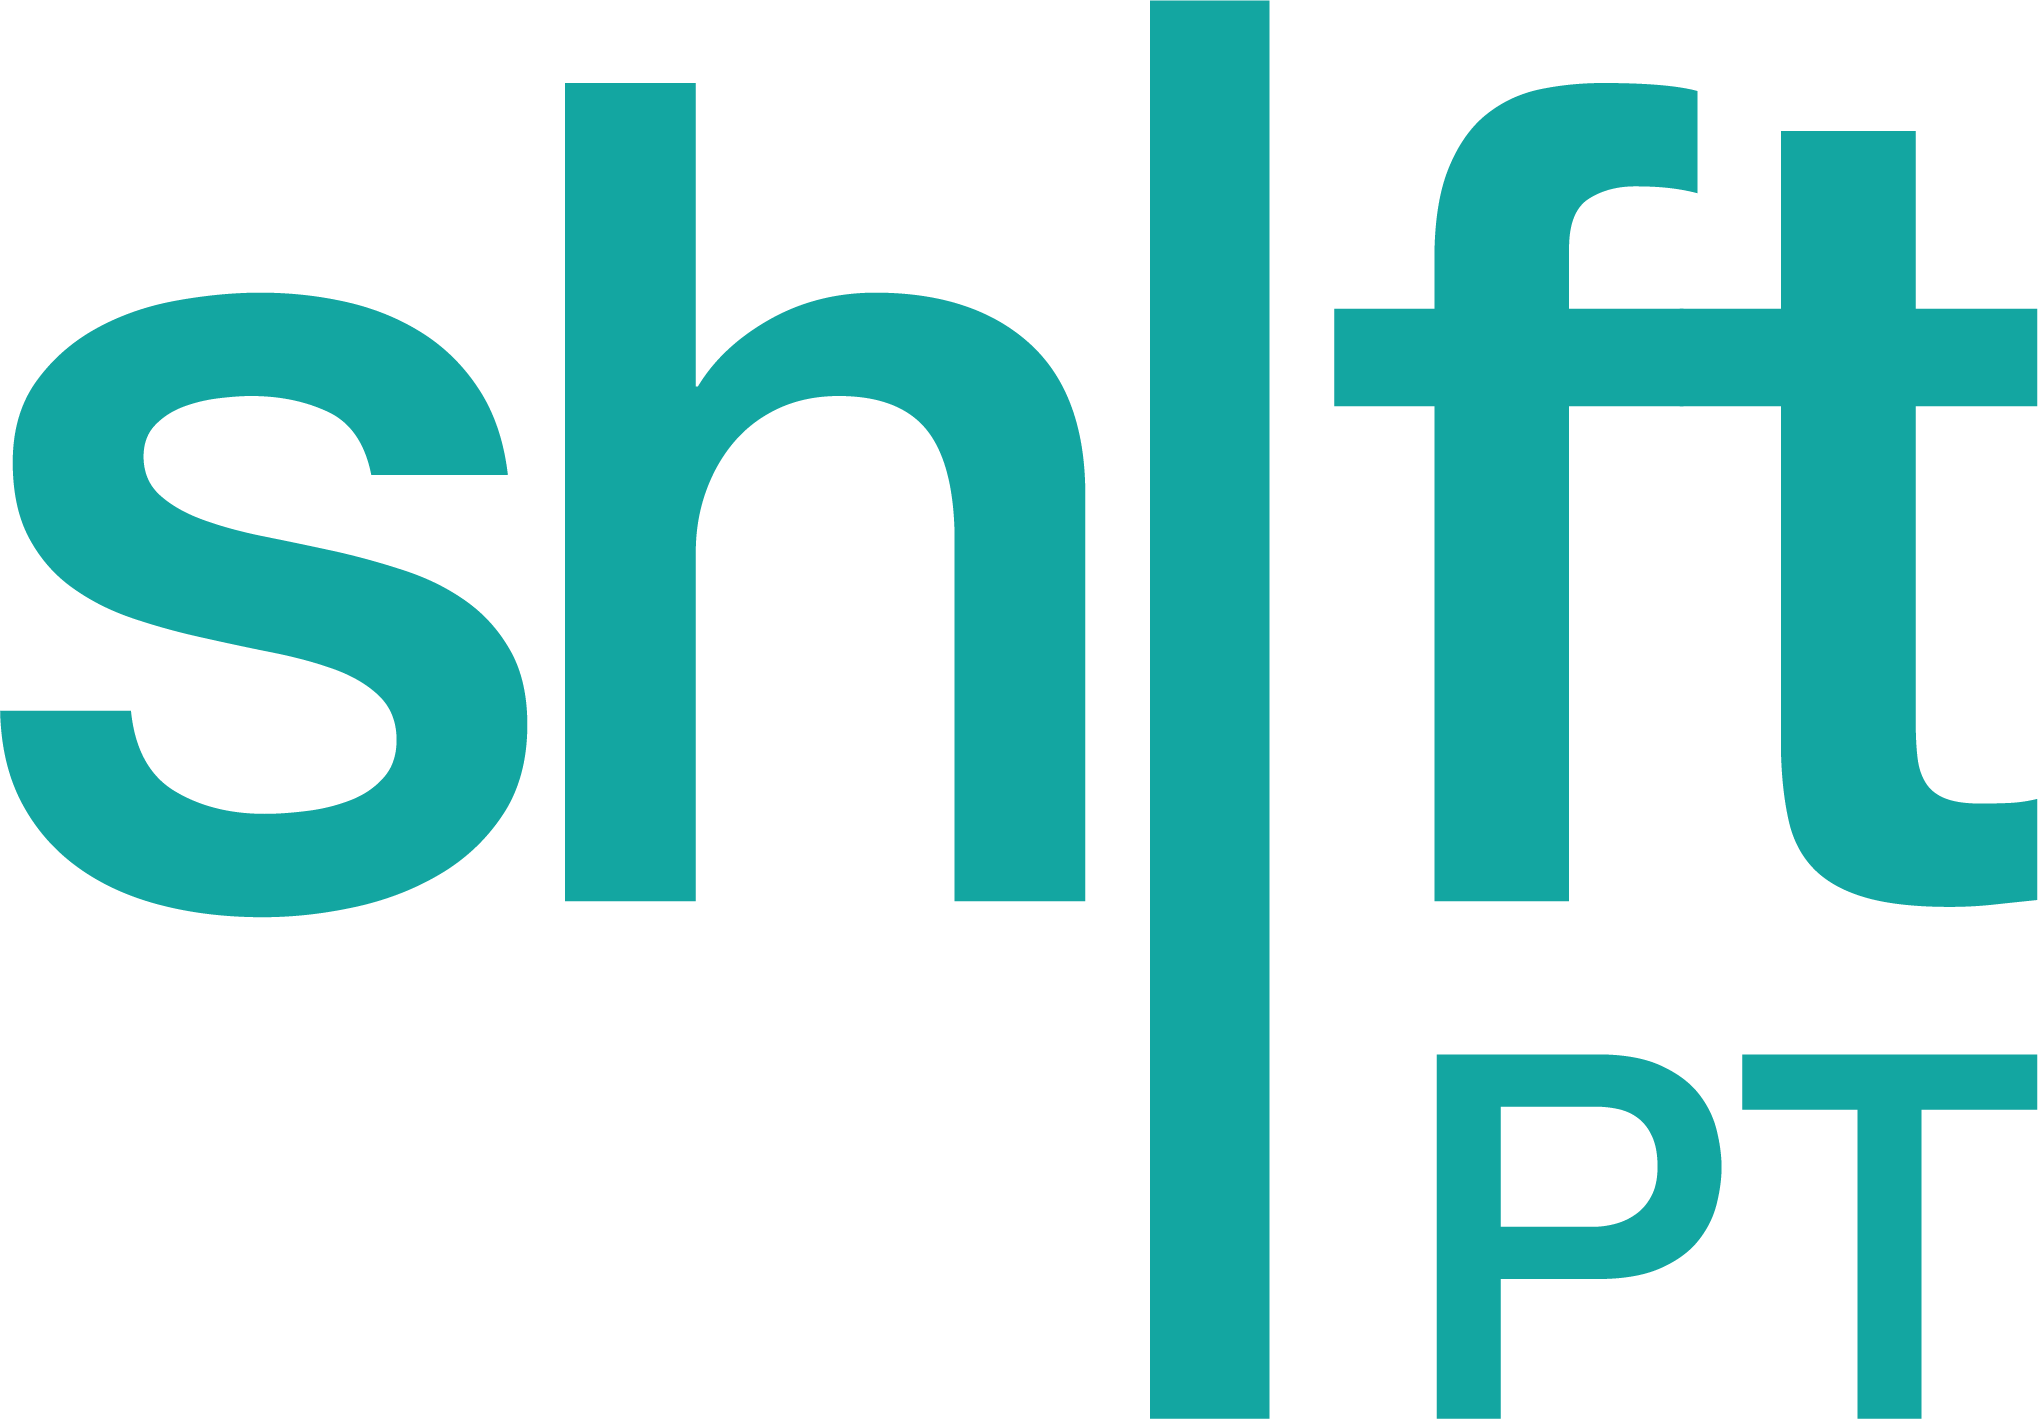 shifthappens